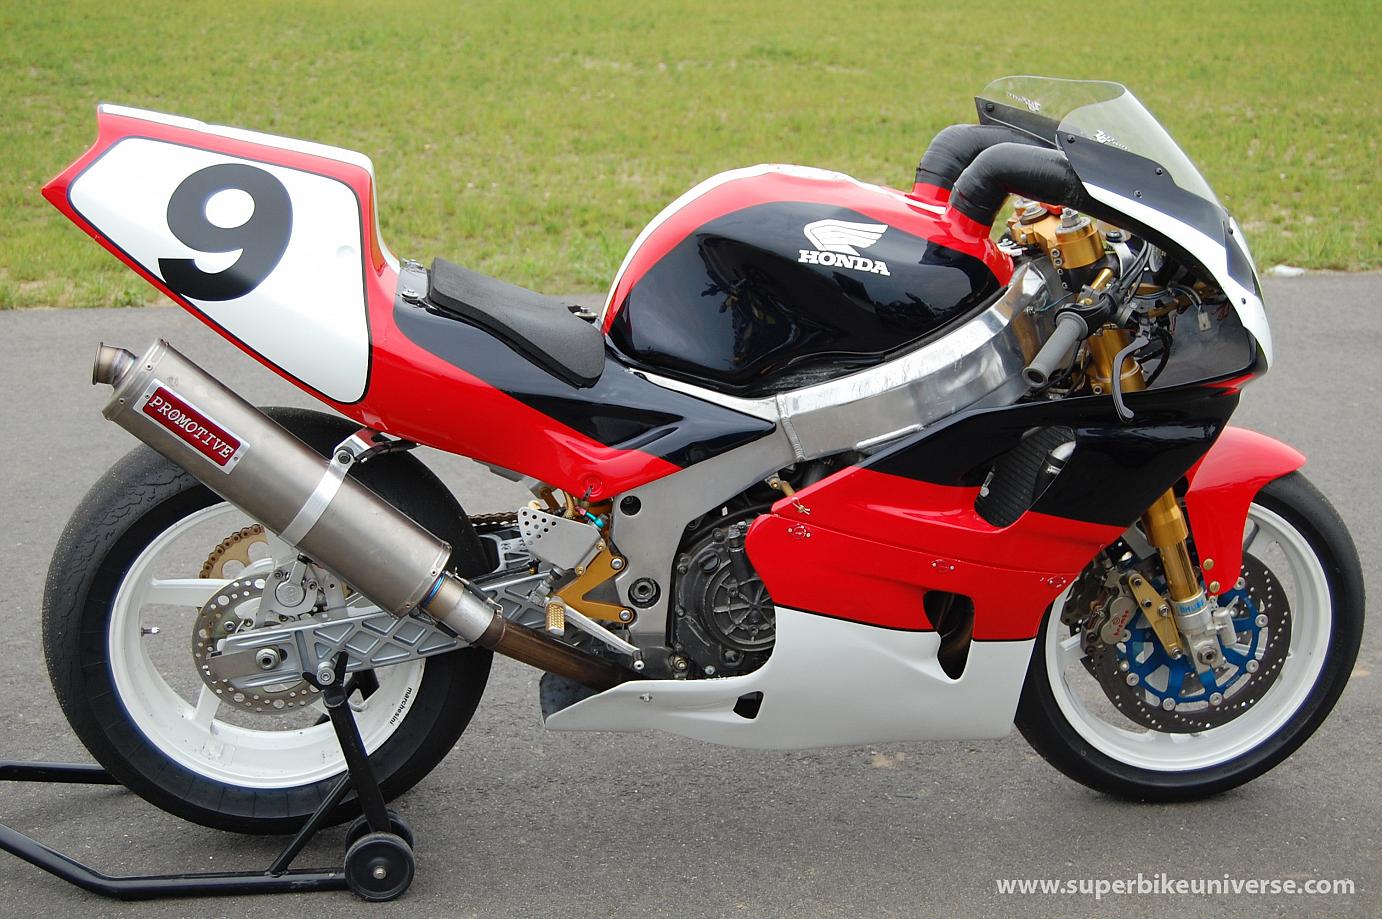 Тест-драйв мотоцикла Honda CBR900RR Fireblade